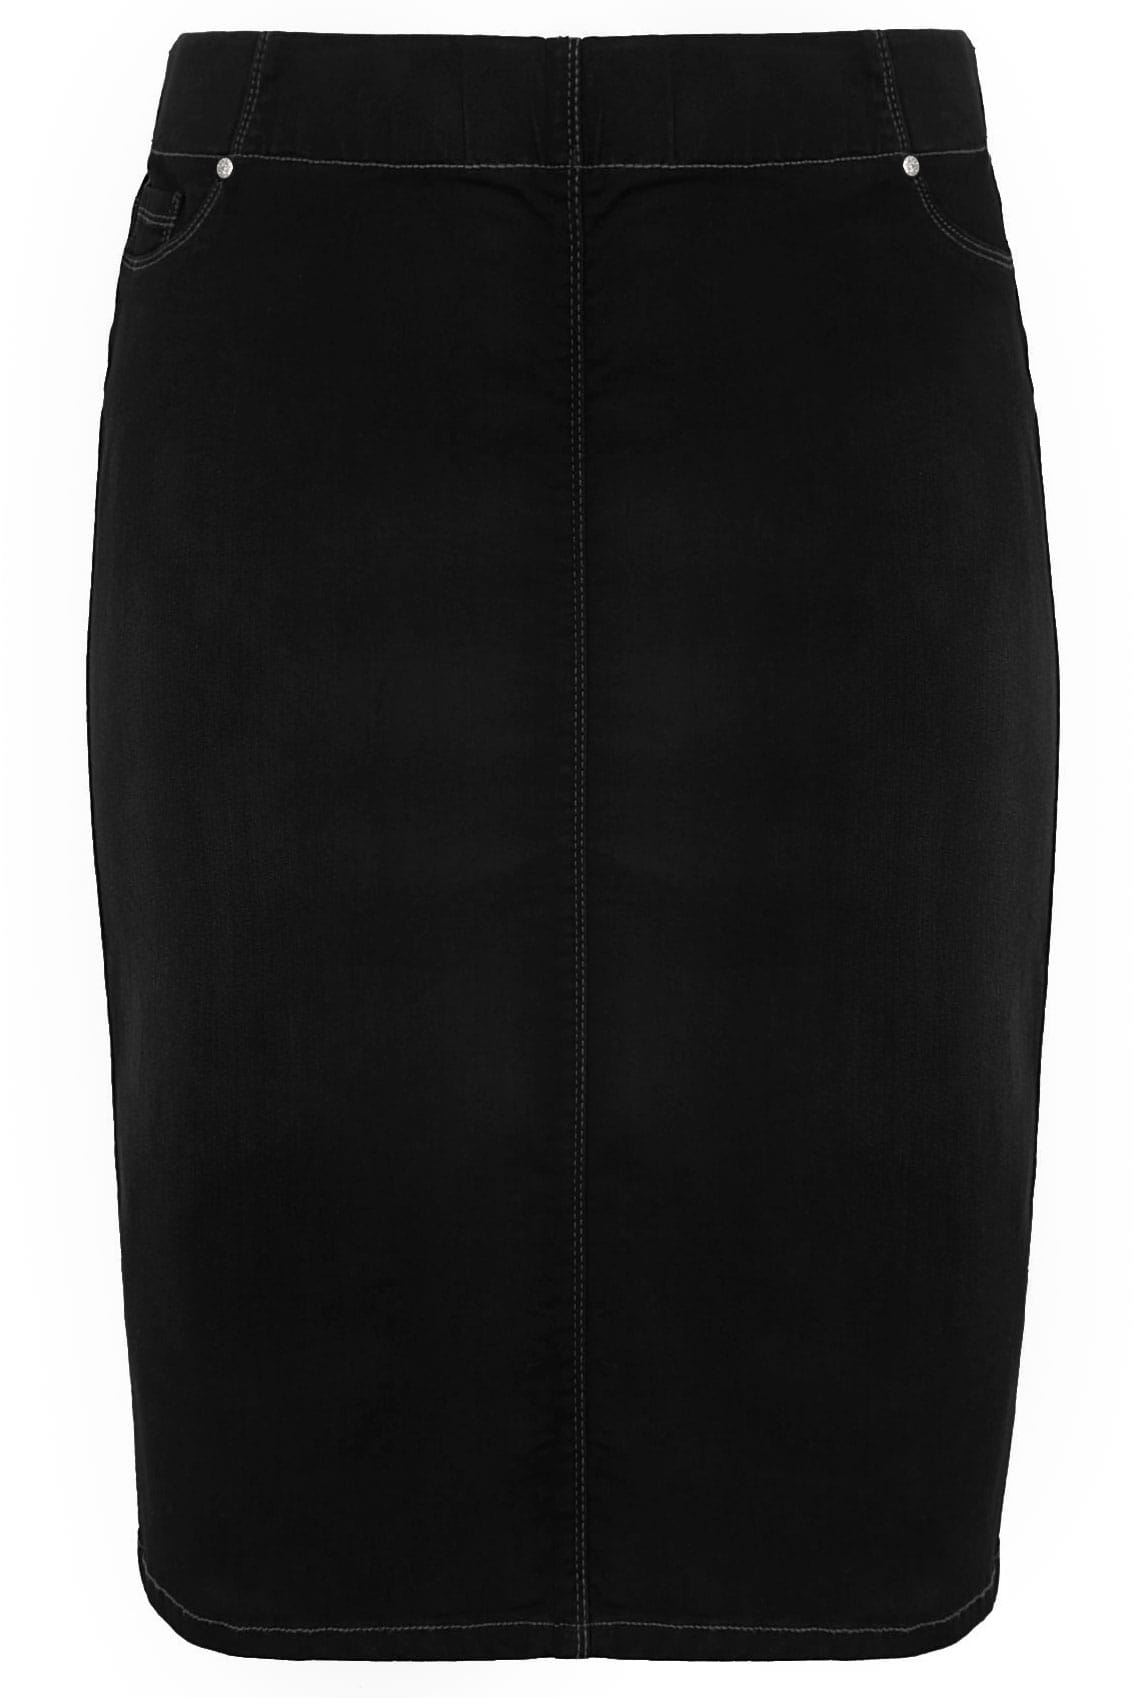 Black Denim Pencil Skirt Plus Size 16 To 36